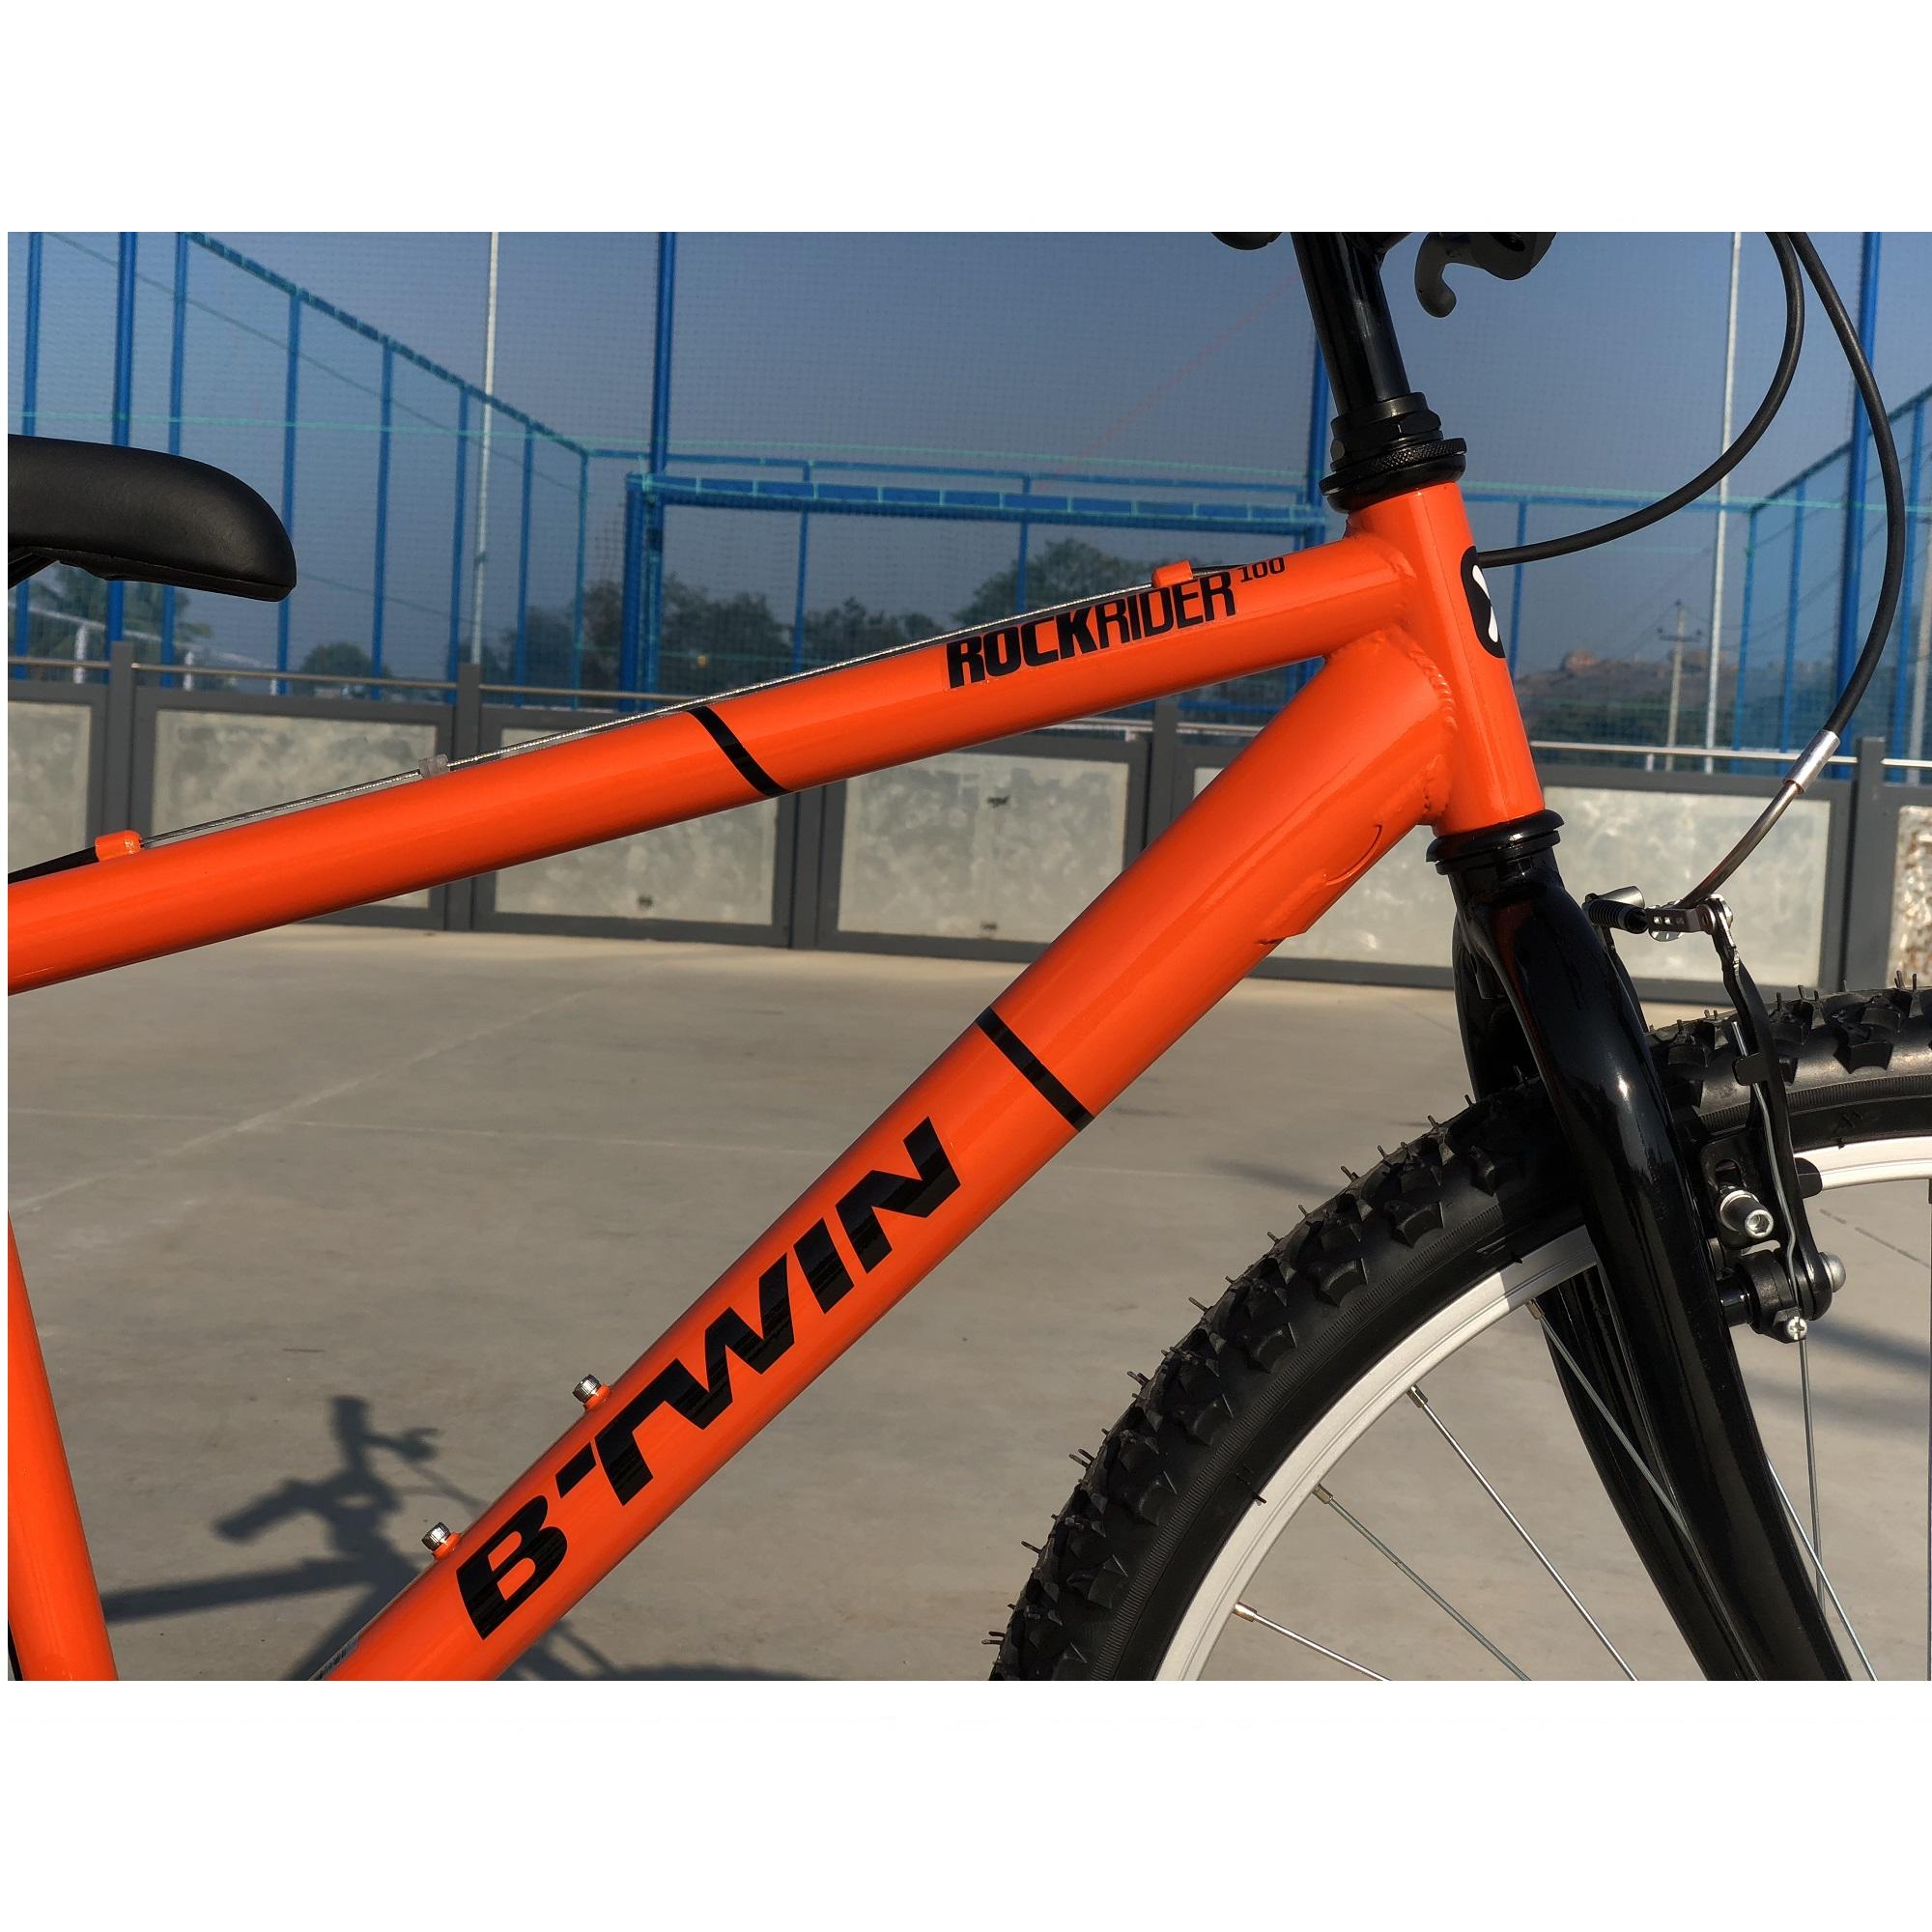 btwin orange bike